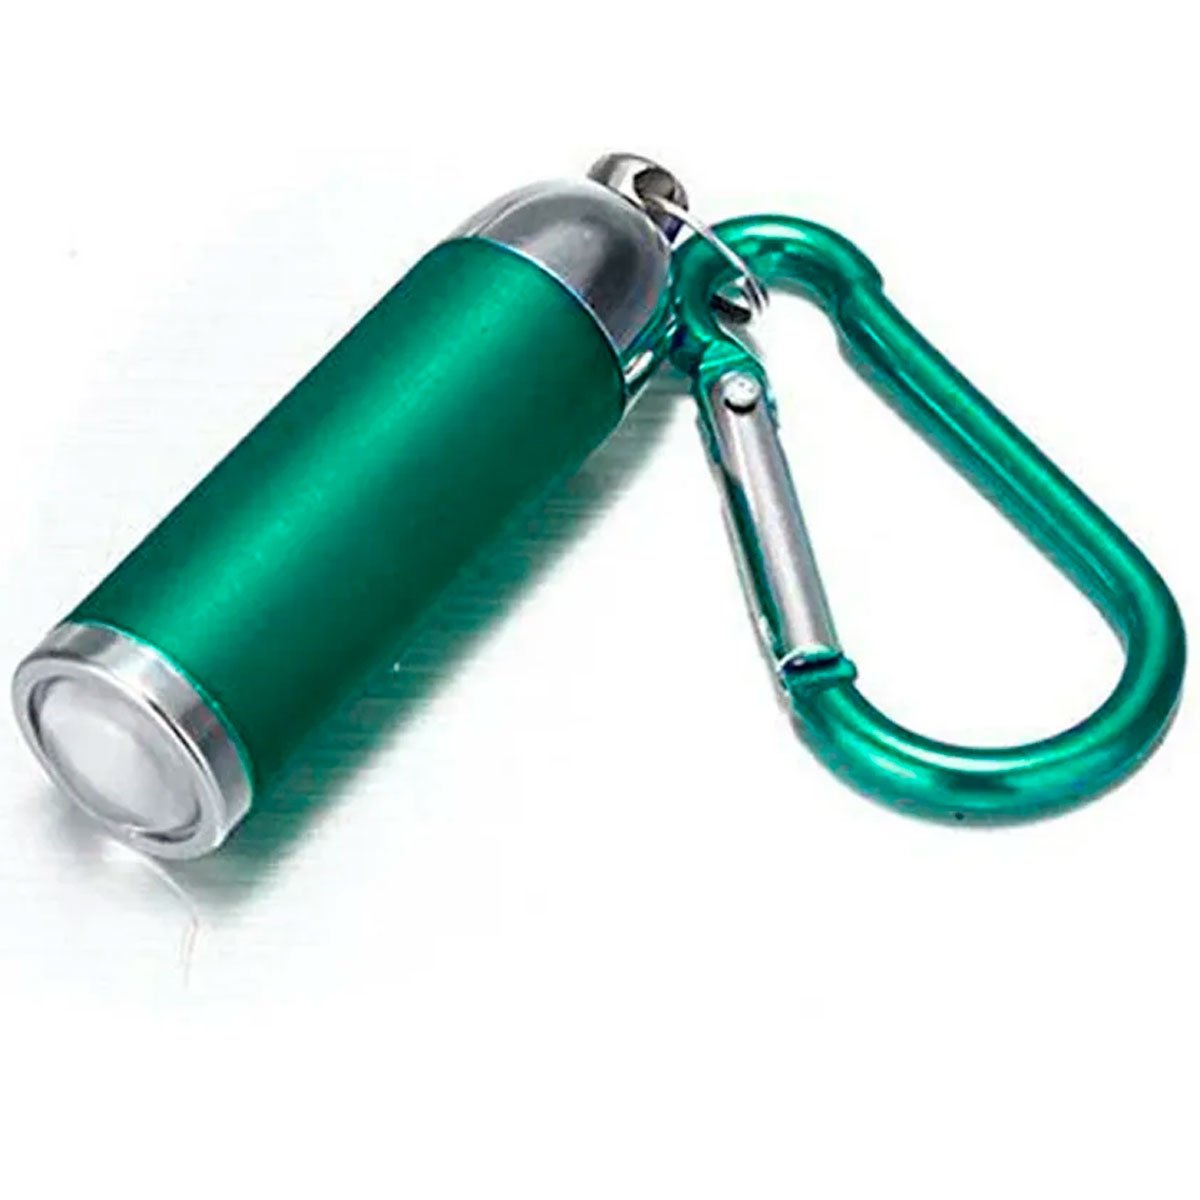 08 mini lanterna led chaveiro mosquetao portatil multifuncional